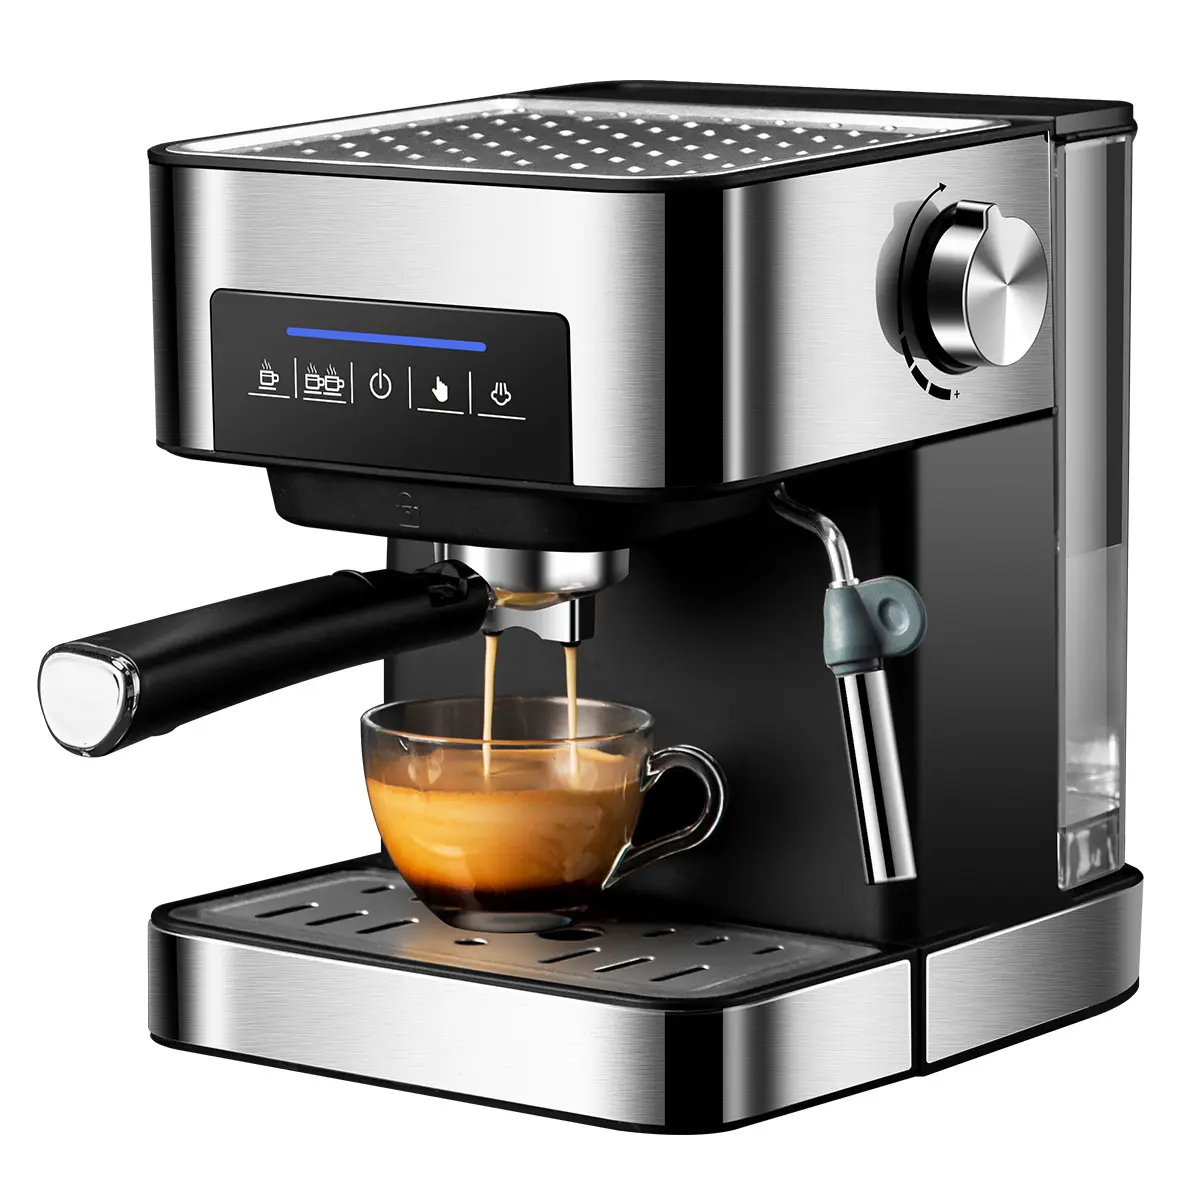 Hochwertige Kaffee maschine Escpress Smart Dripper Edelstahl Kaffee maschine Kaffee maschine für den Heimgebrauch